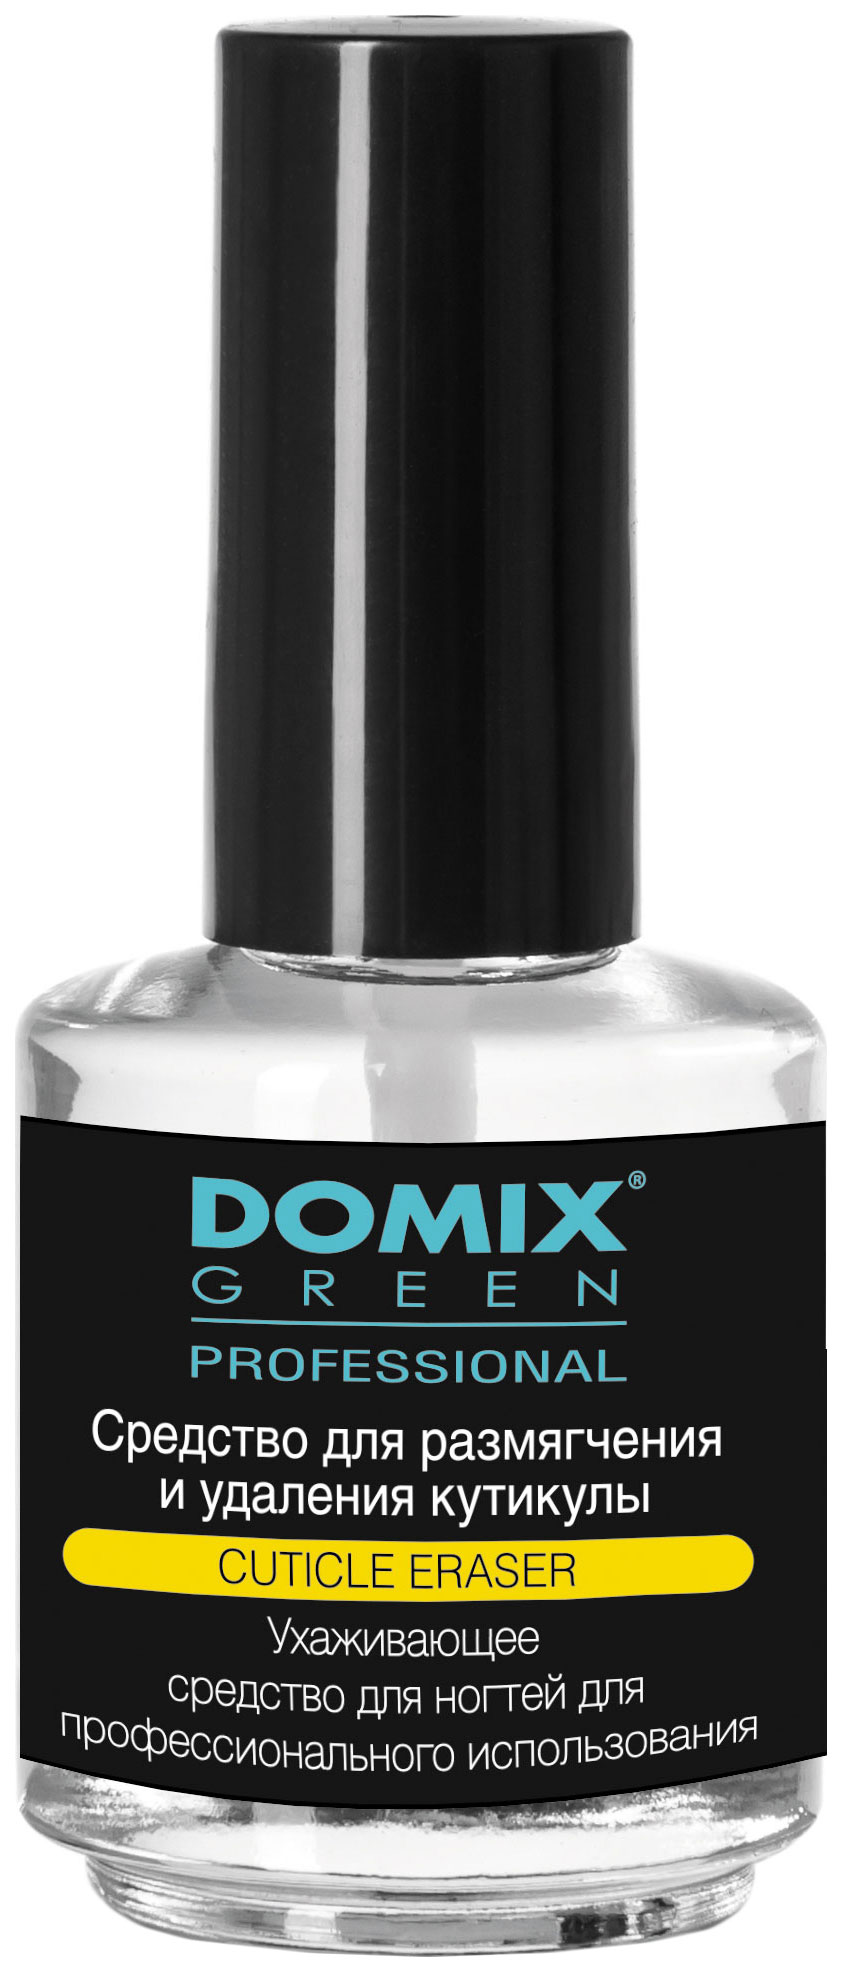 Средство для удаления кутикулы Domix Green Professional Cuticle Eraser 17 мл domix миска для краски черная domix green professional